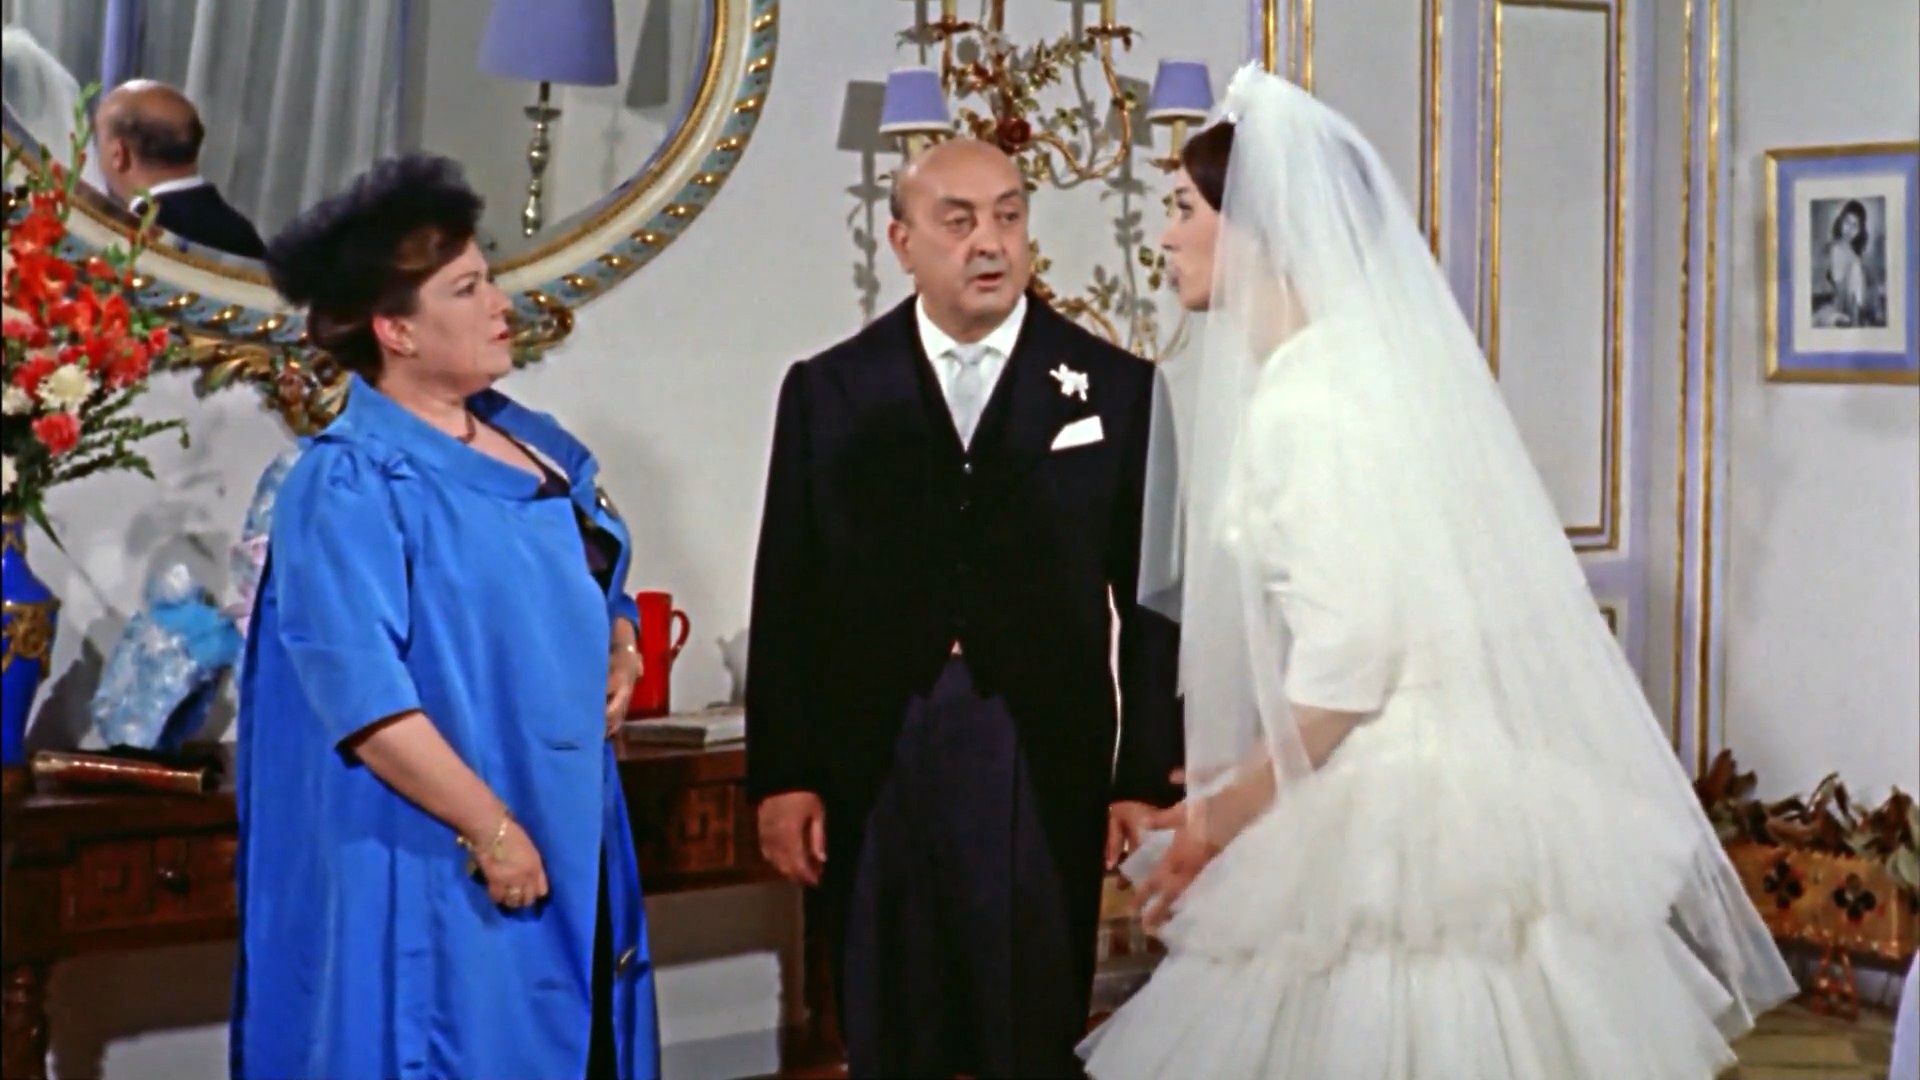 La boda era a las doce (1964)12.jpg